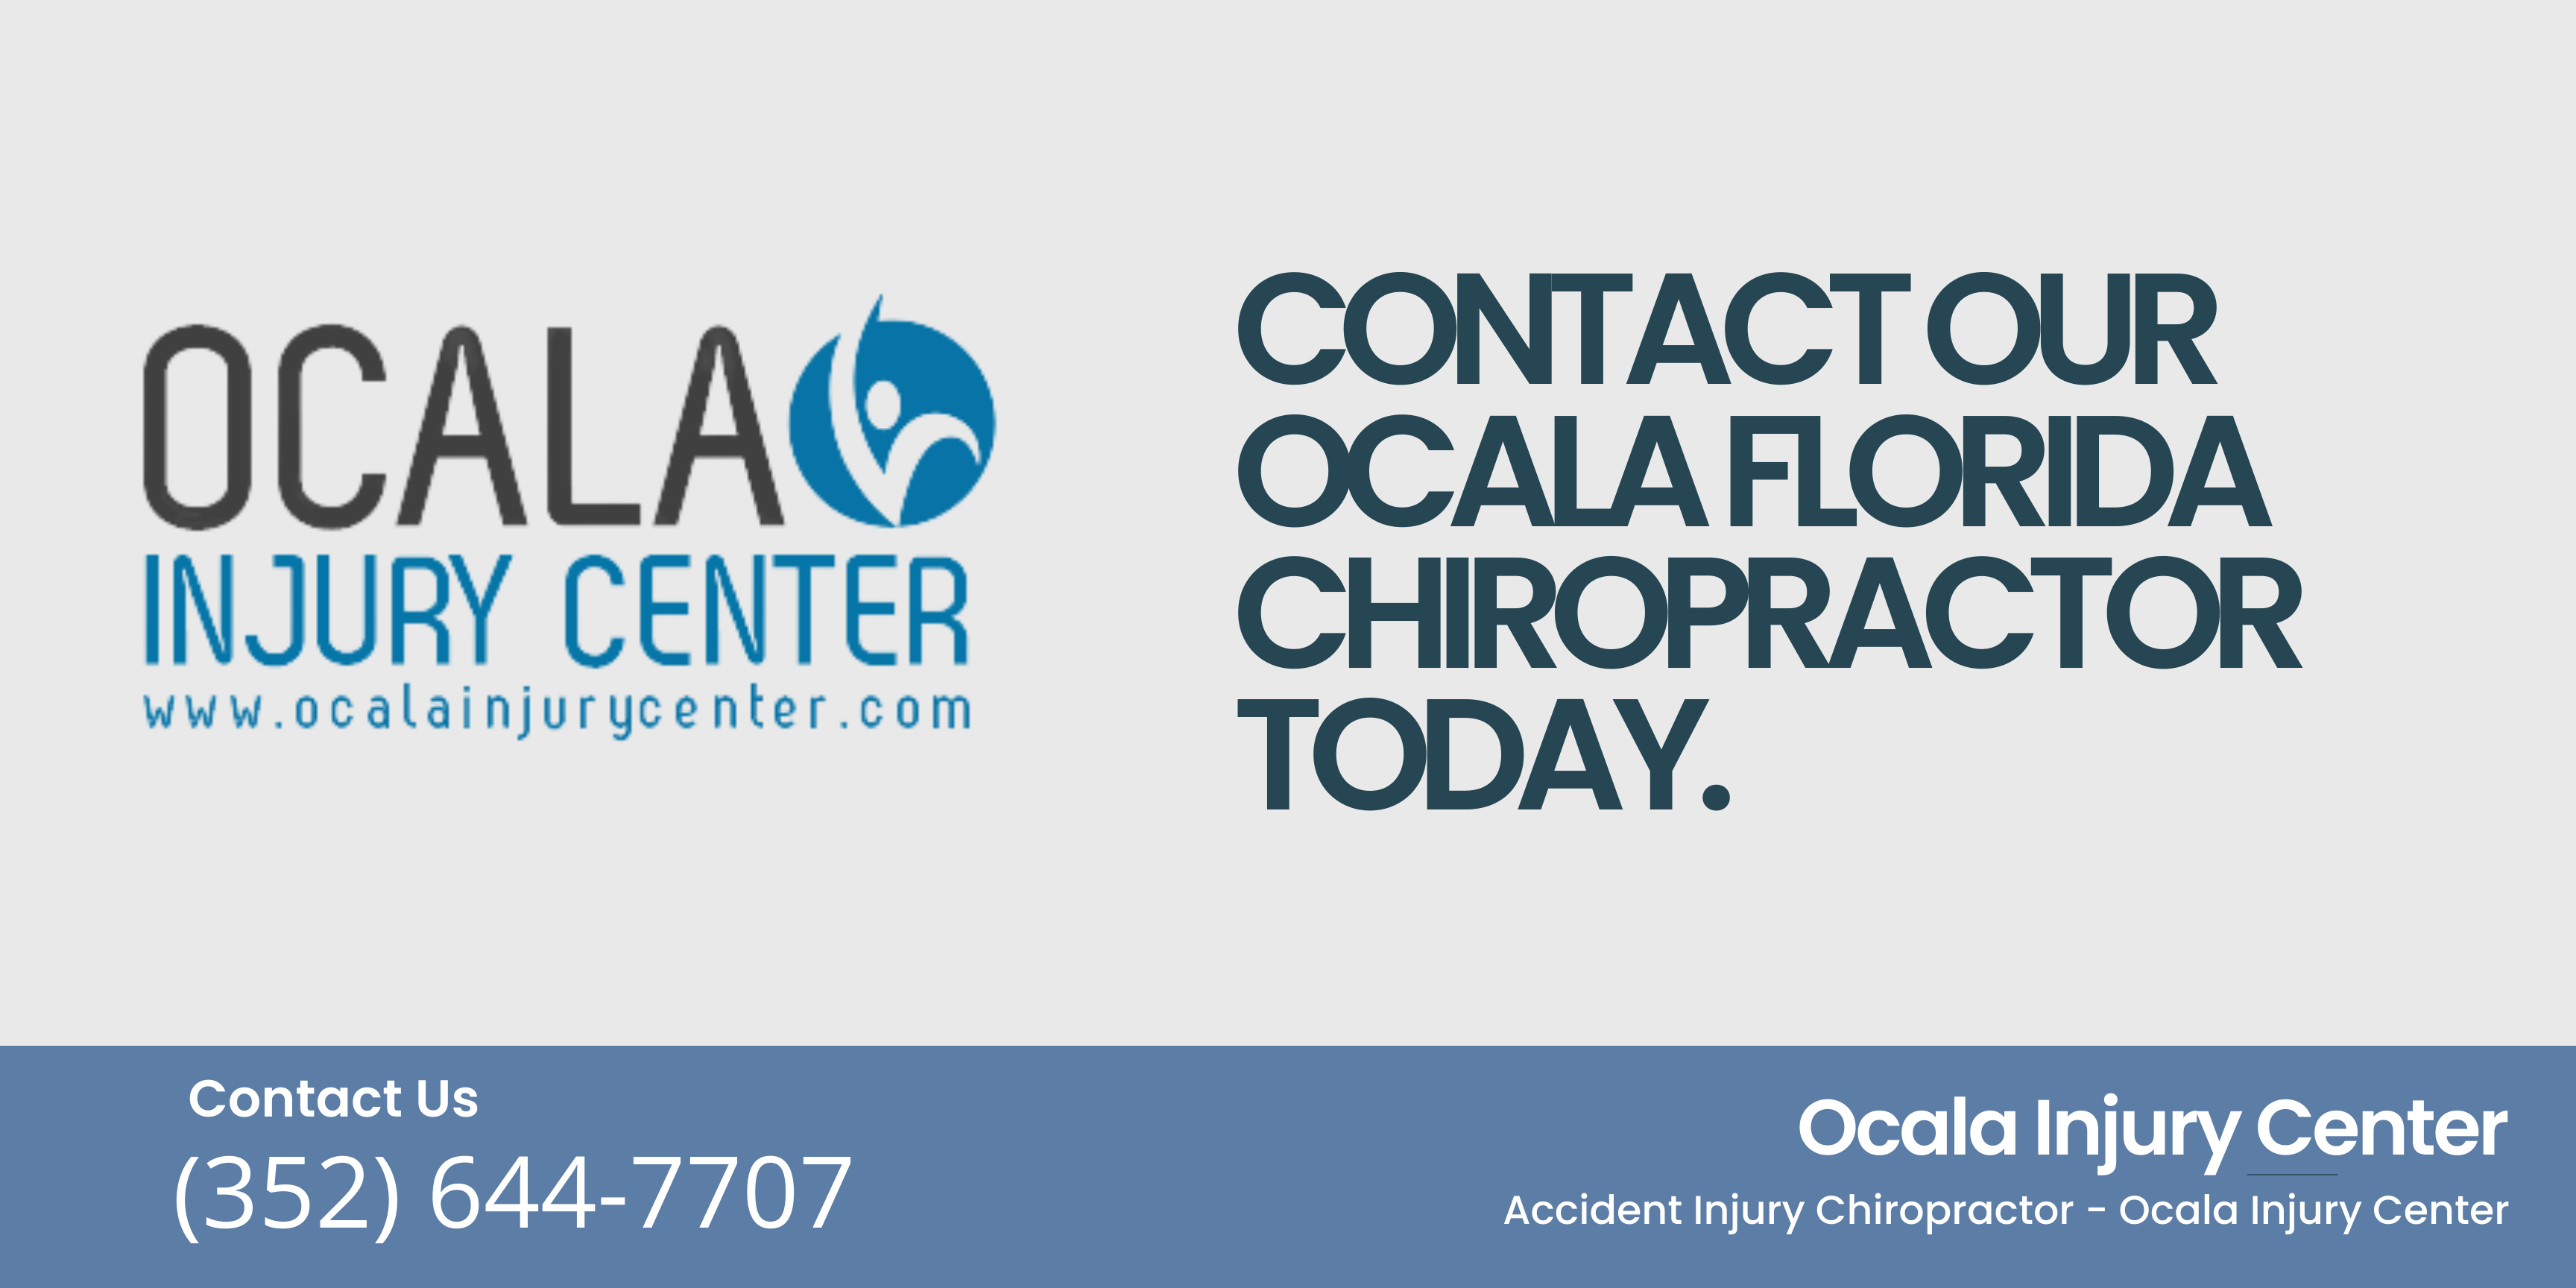 contact our ocala Florida Chiropractor